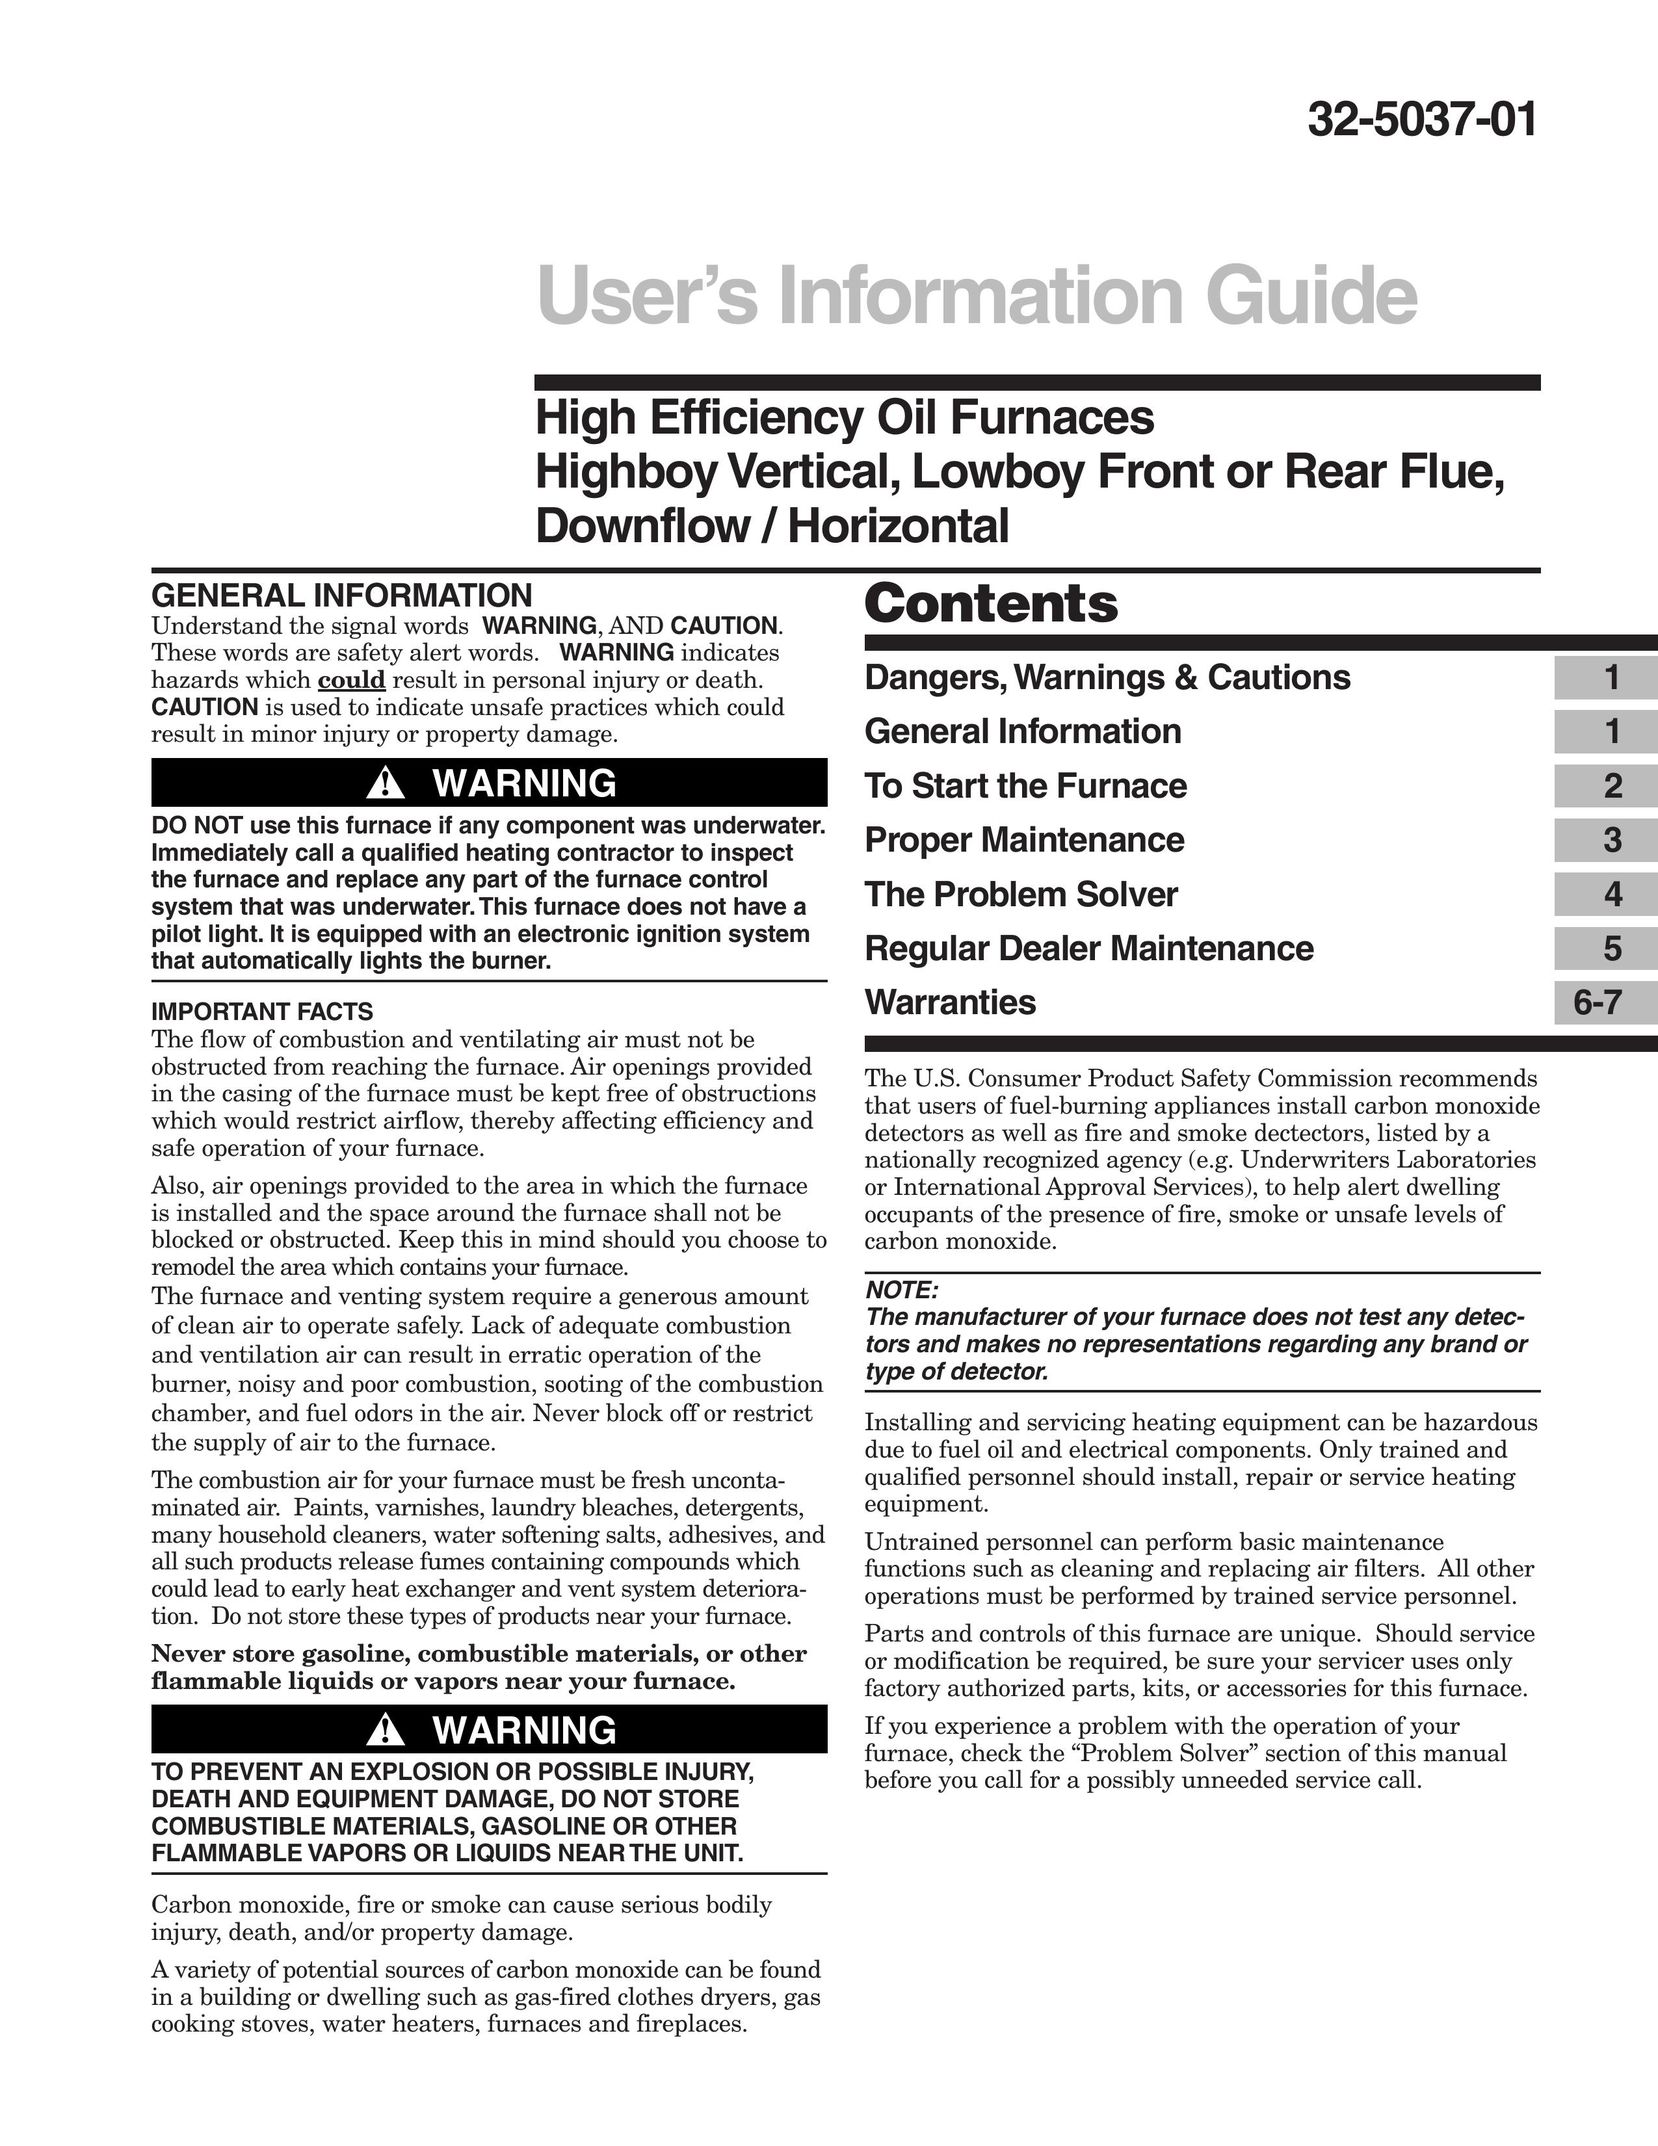 American Standard 32-5037-01 Furnace User Manual